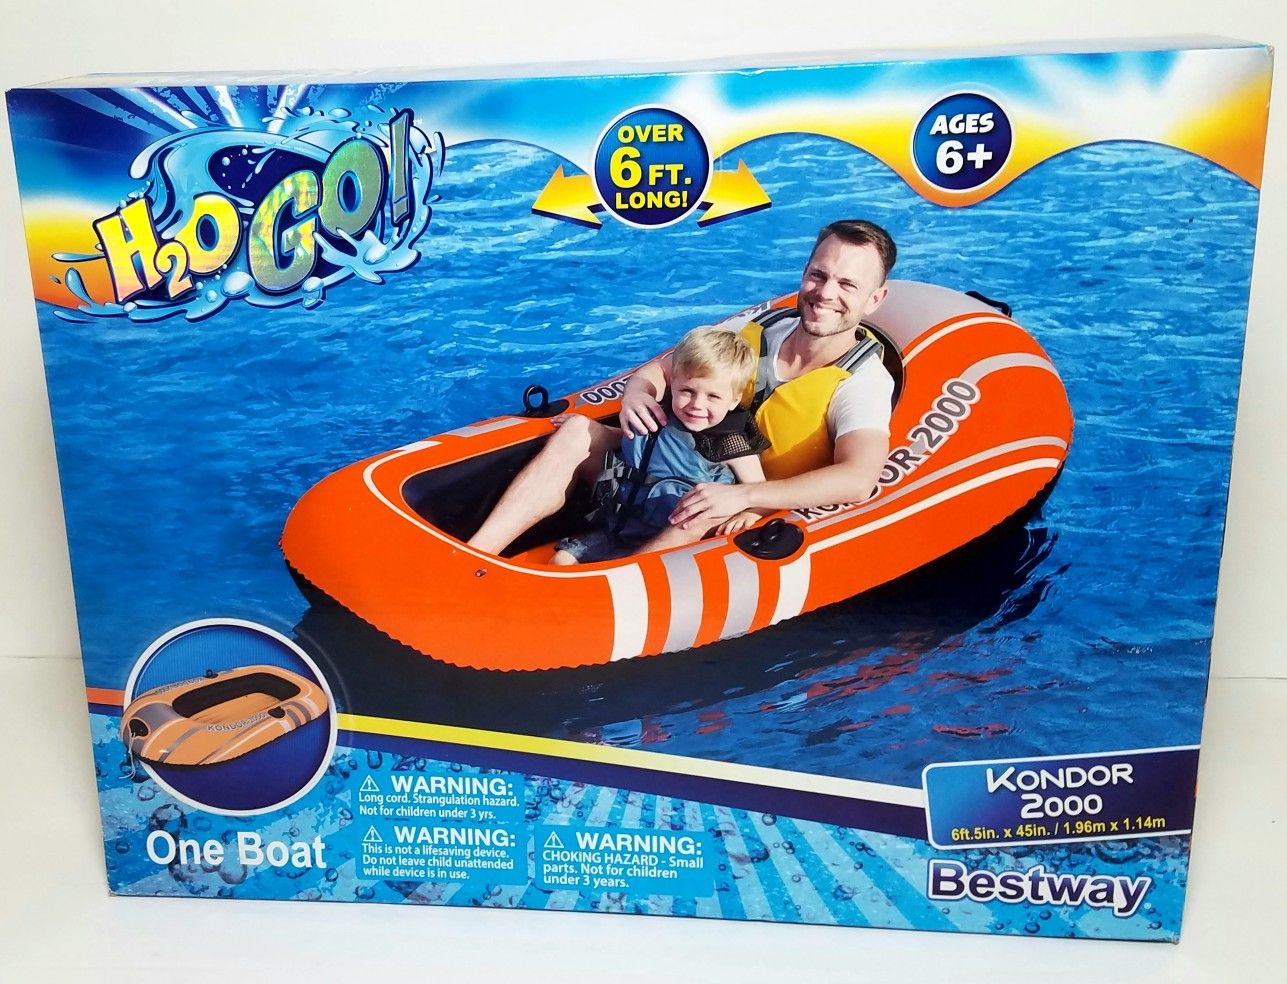 H2o Go Bestway Inflatable Boat Kondor 2000 6ft 5in. X 45in. Built In Oar Locks